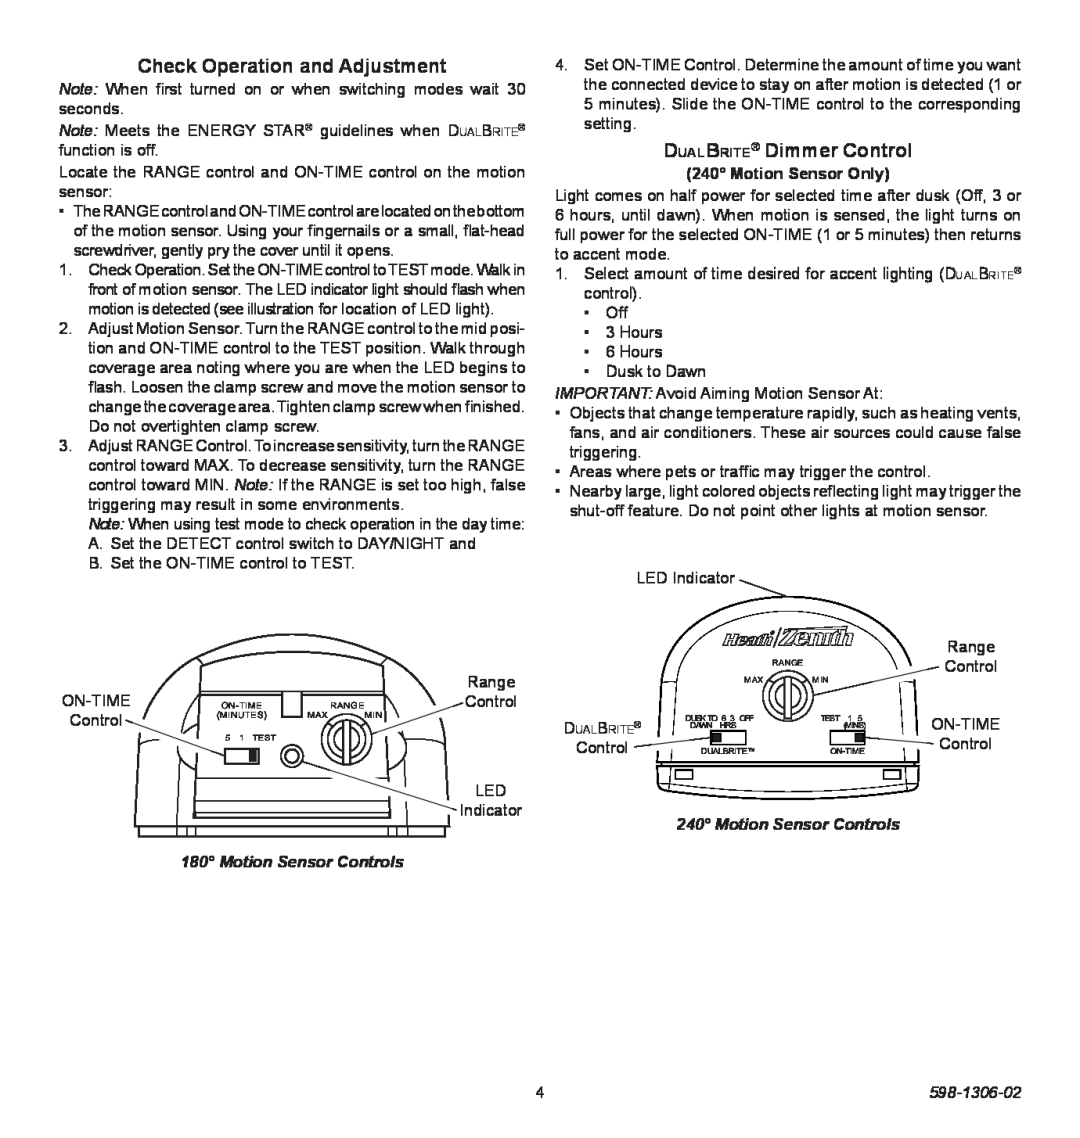 Heath Zenith 598-1306-02 manual Check Operation and Adjustment, DualBrite Dimmer Control, Motion Sensor Controls 